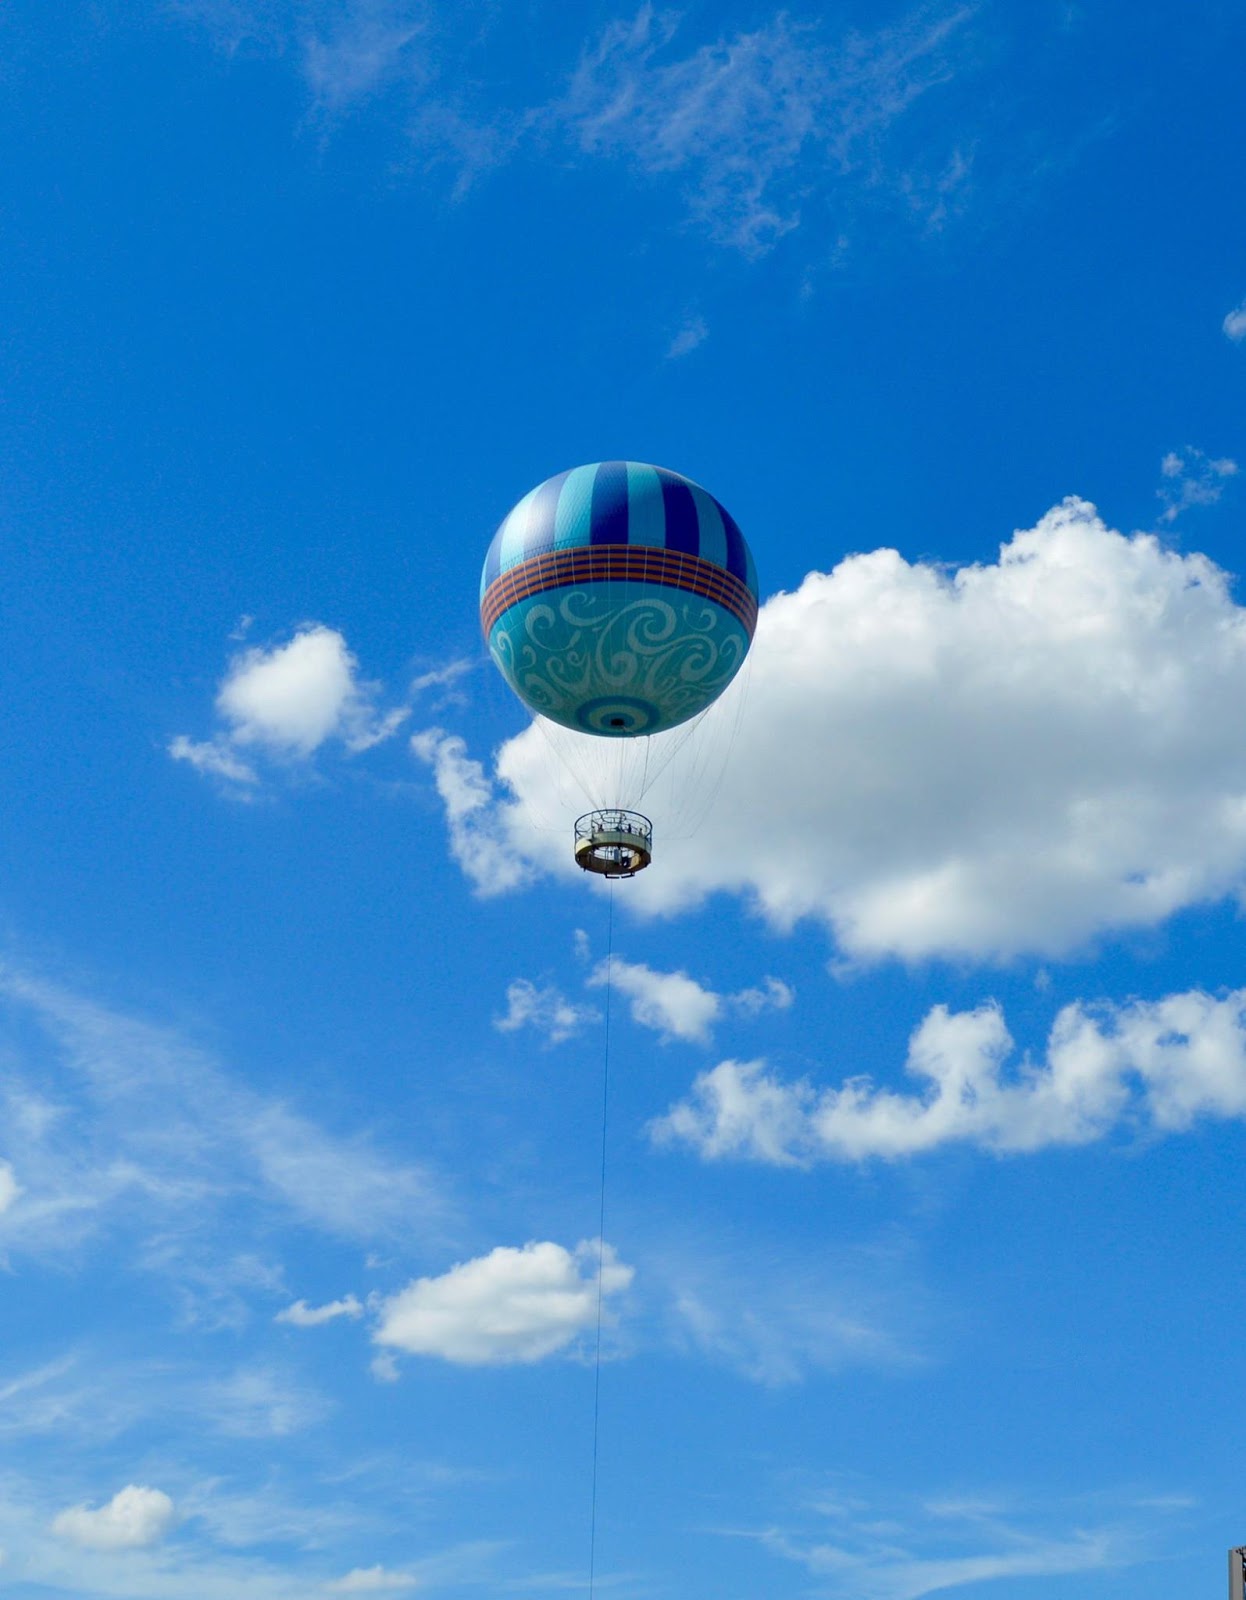 11 Things to do with Kids at Disney Springs Orlando, Florida  - hot air balloon